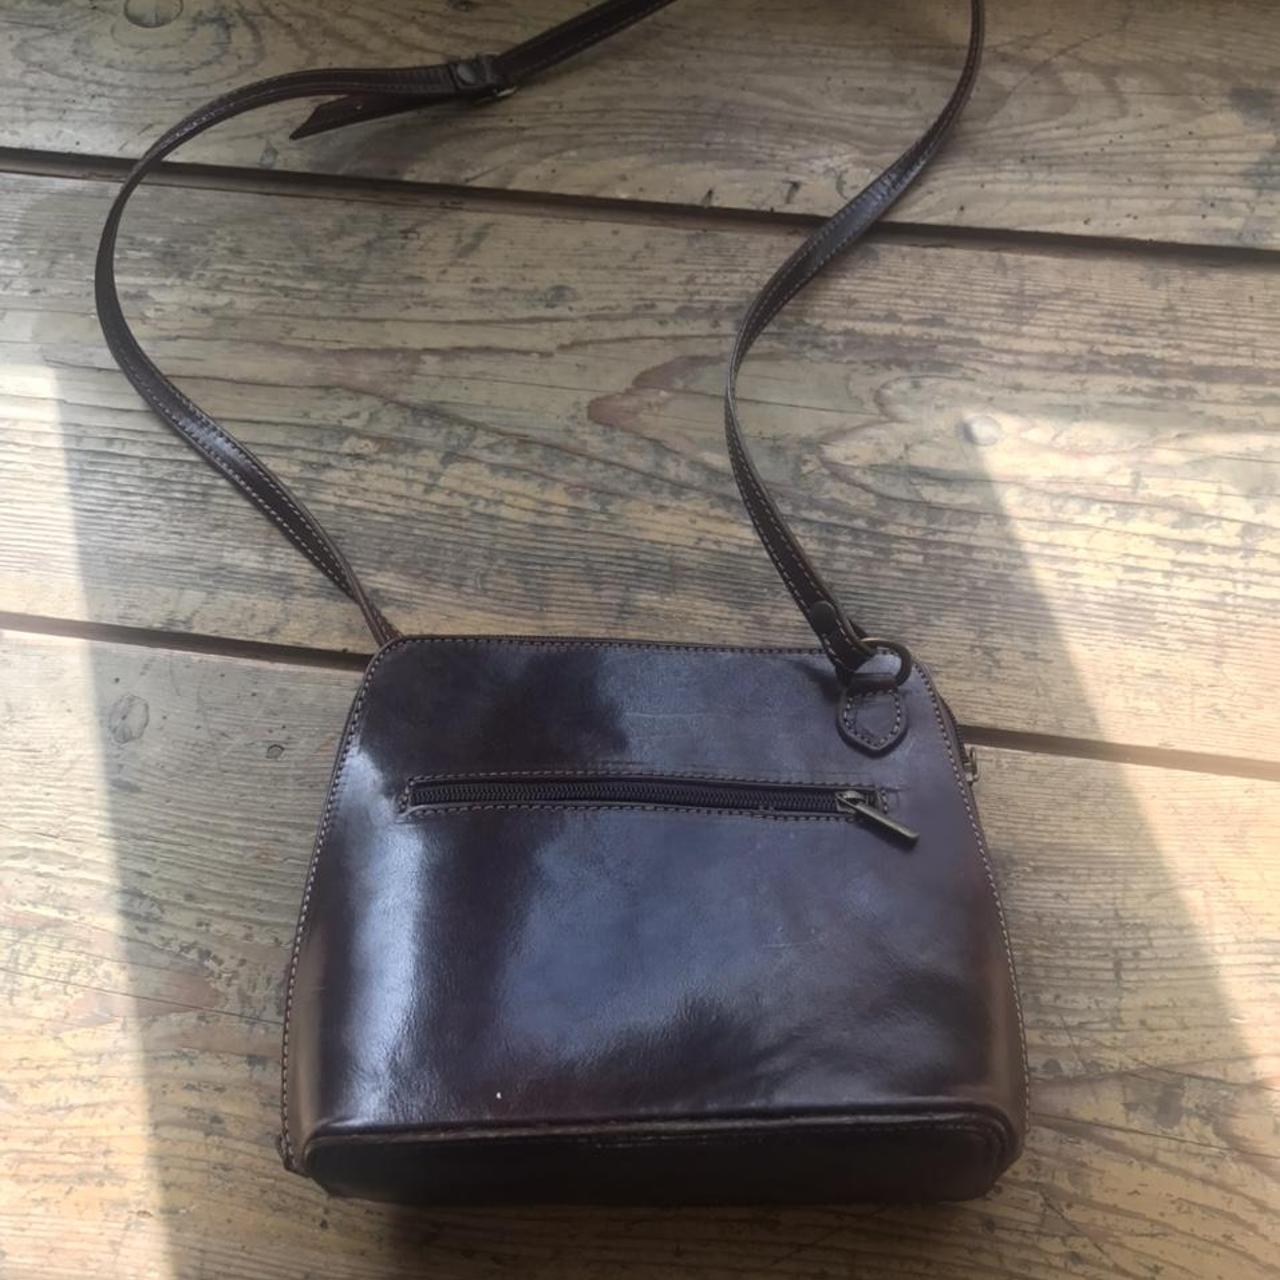 Product Image 4 - Amazing Italian leather bag that